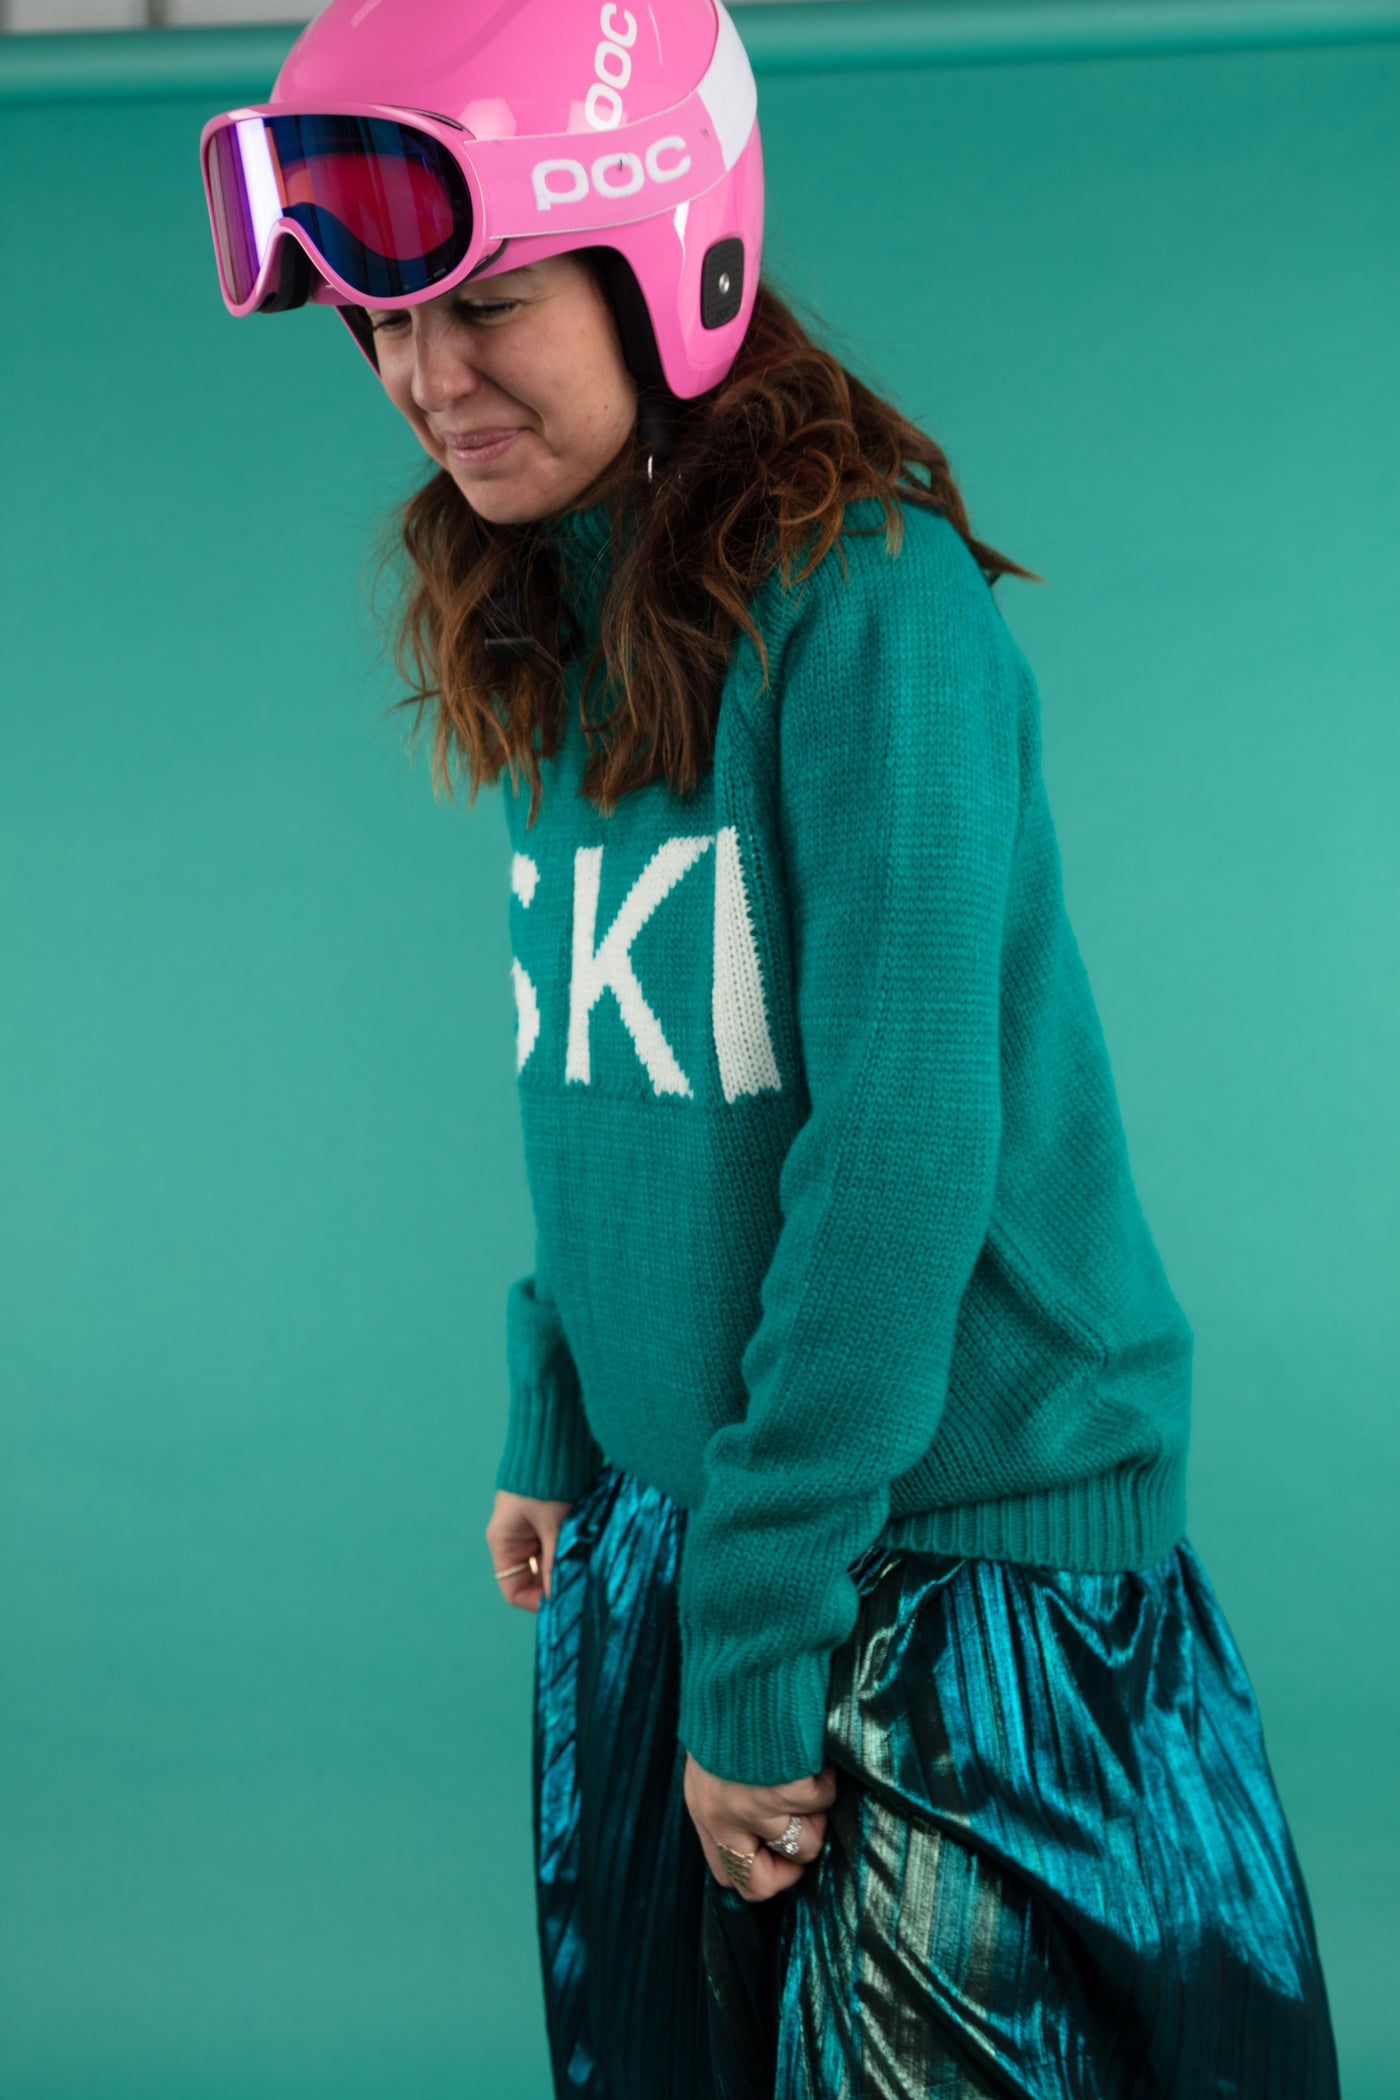 BIRDZ Ski knit |Quetzal Green| Women